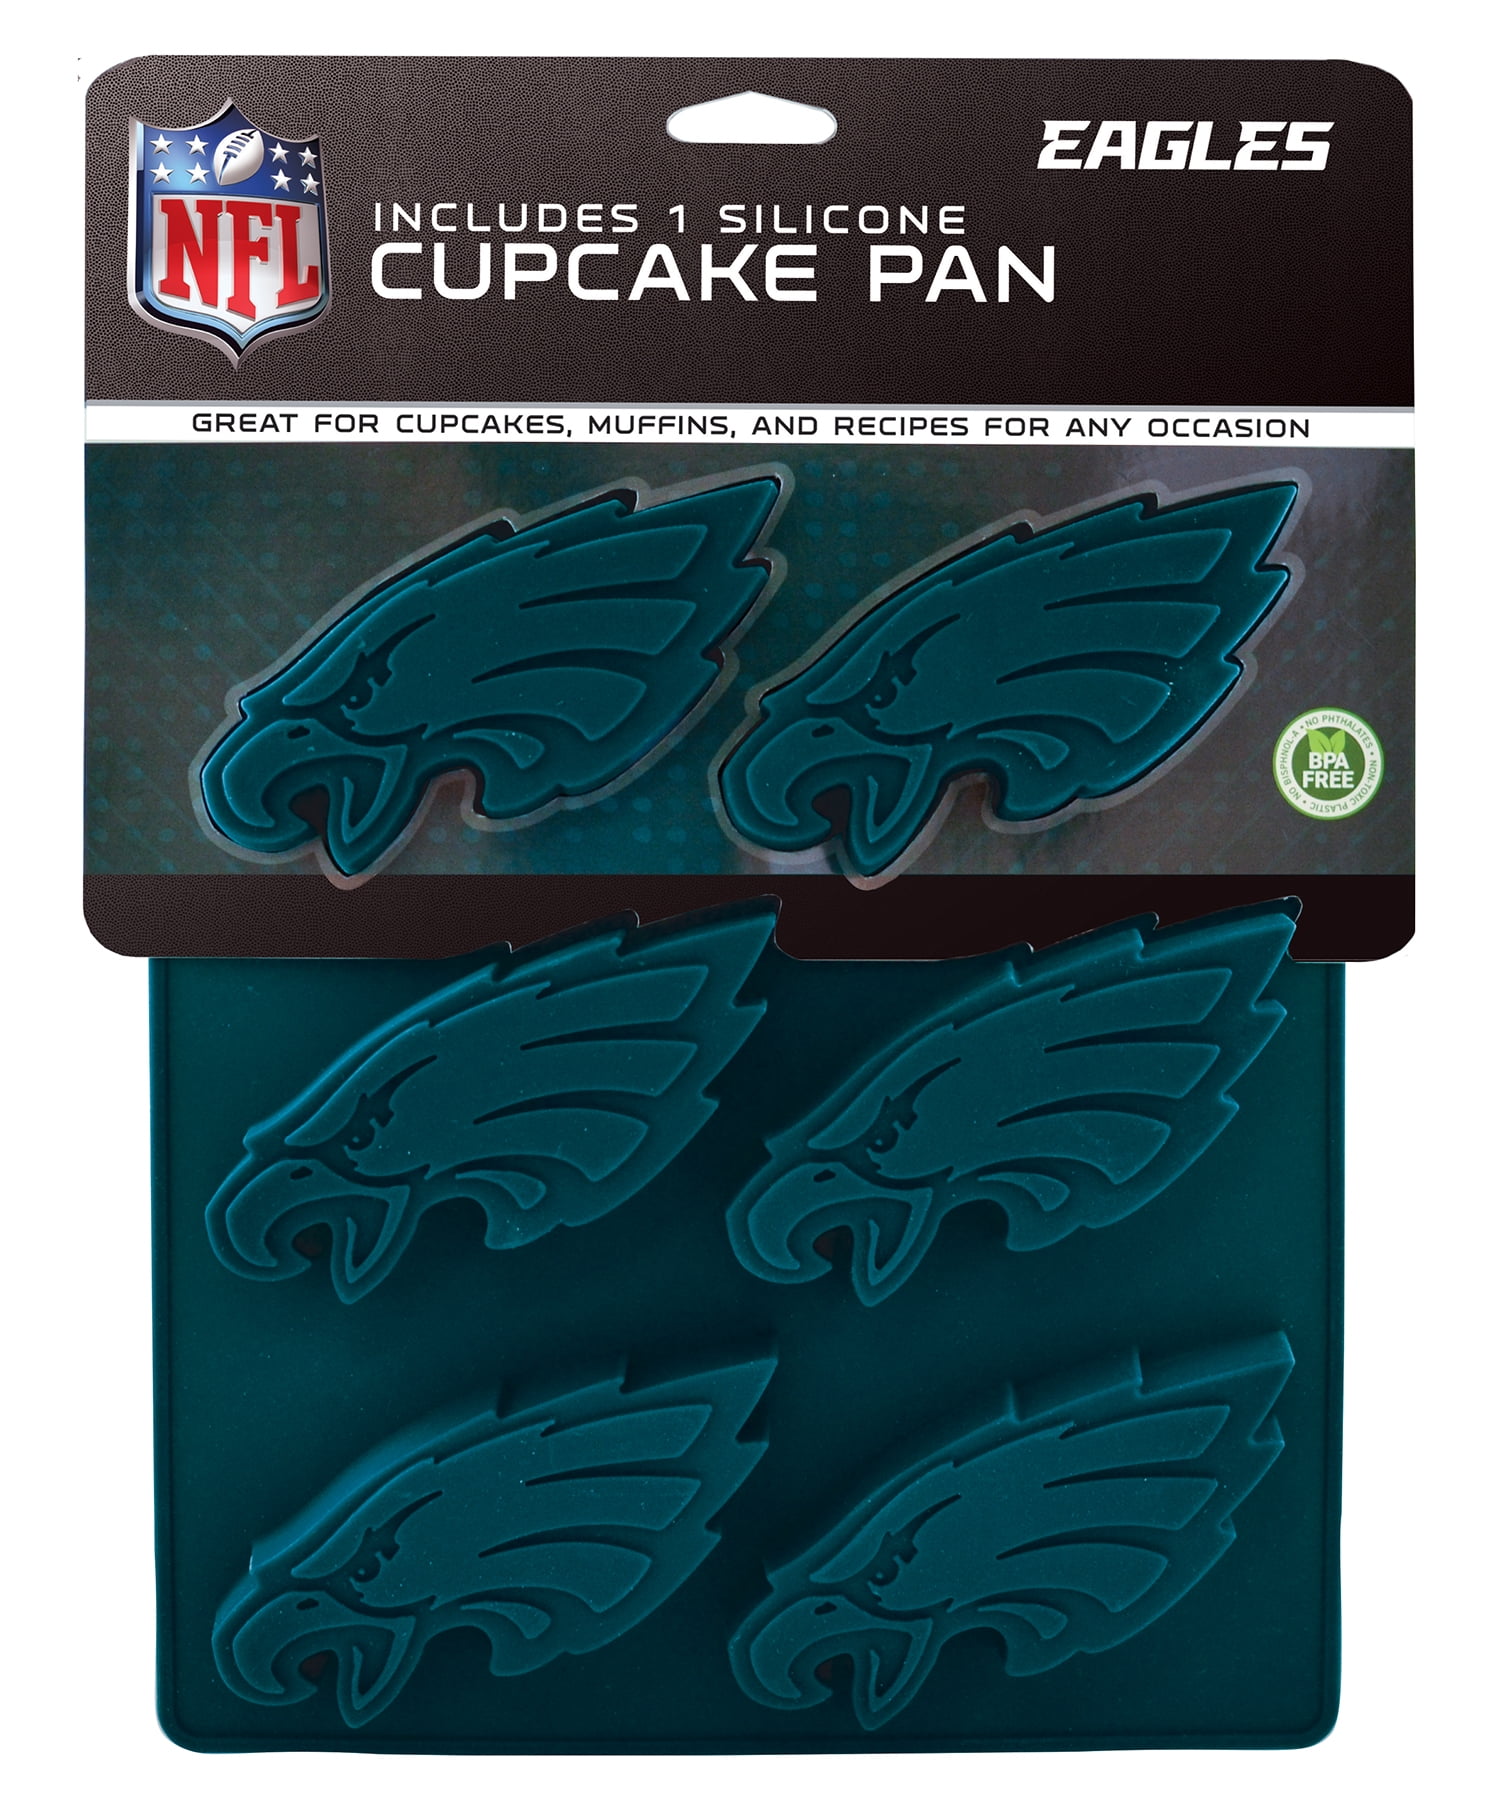 MasterPieces Game Day - FanPans NFL Philadelphia Eagles Team Logo Silicone Cake  Pan - Dishwasher Safe